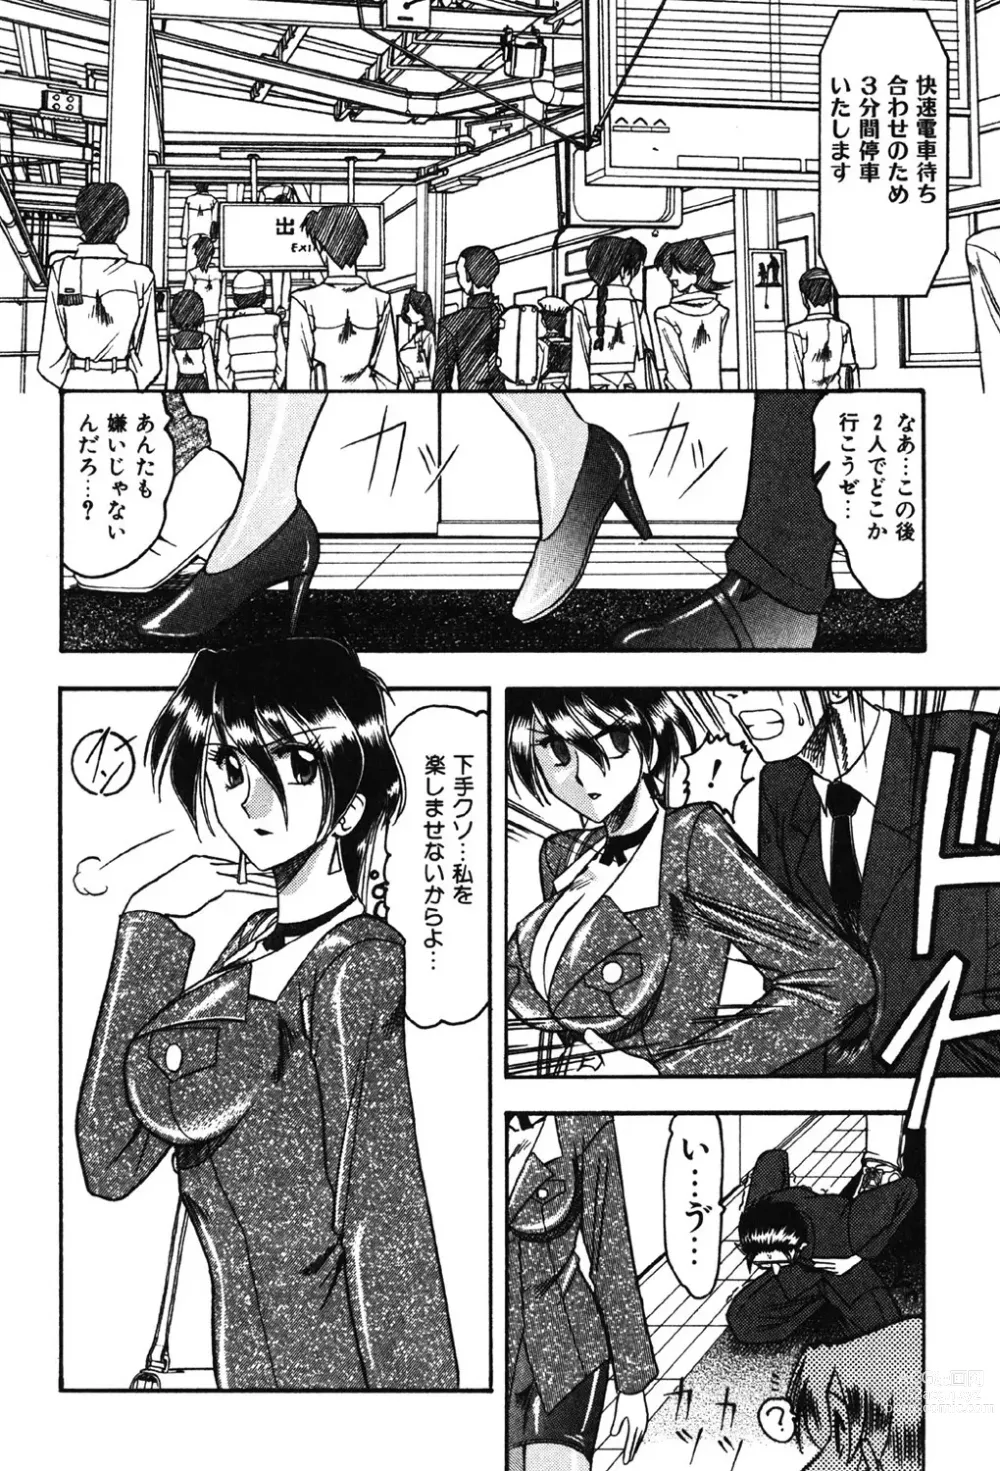 Page 7 of manga Hahaoya Ga Onna Ni Naru Toki